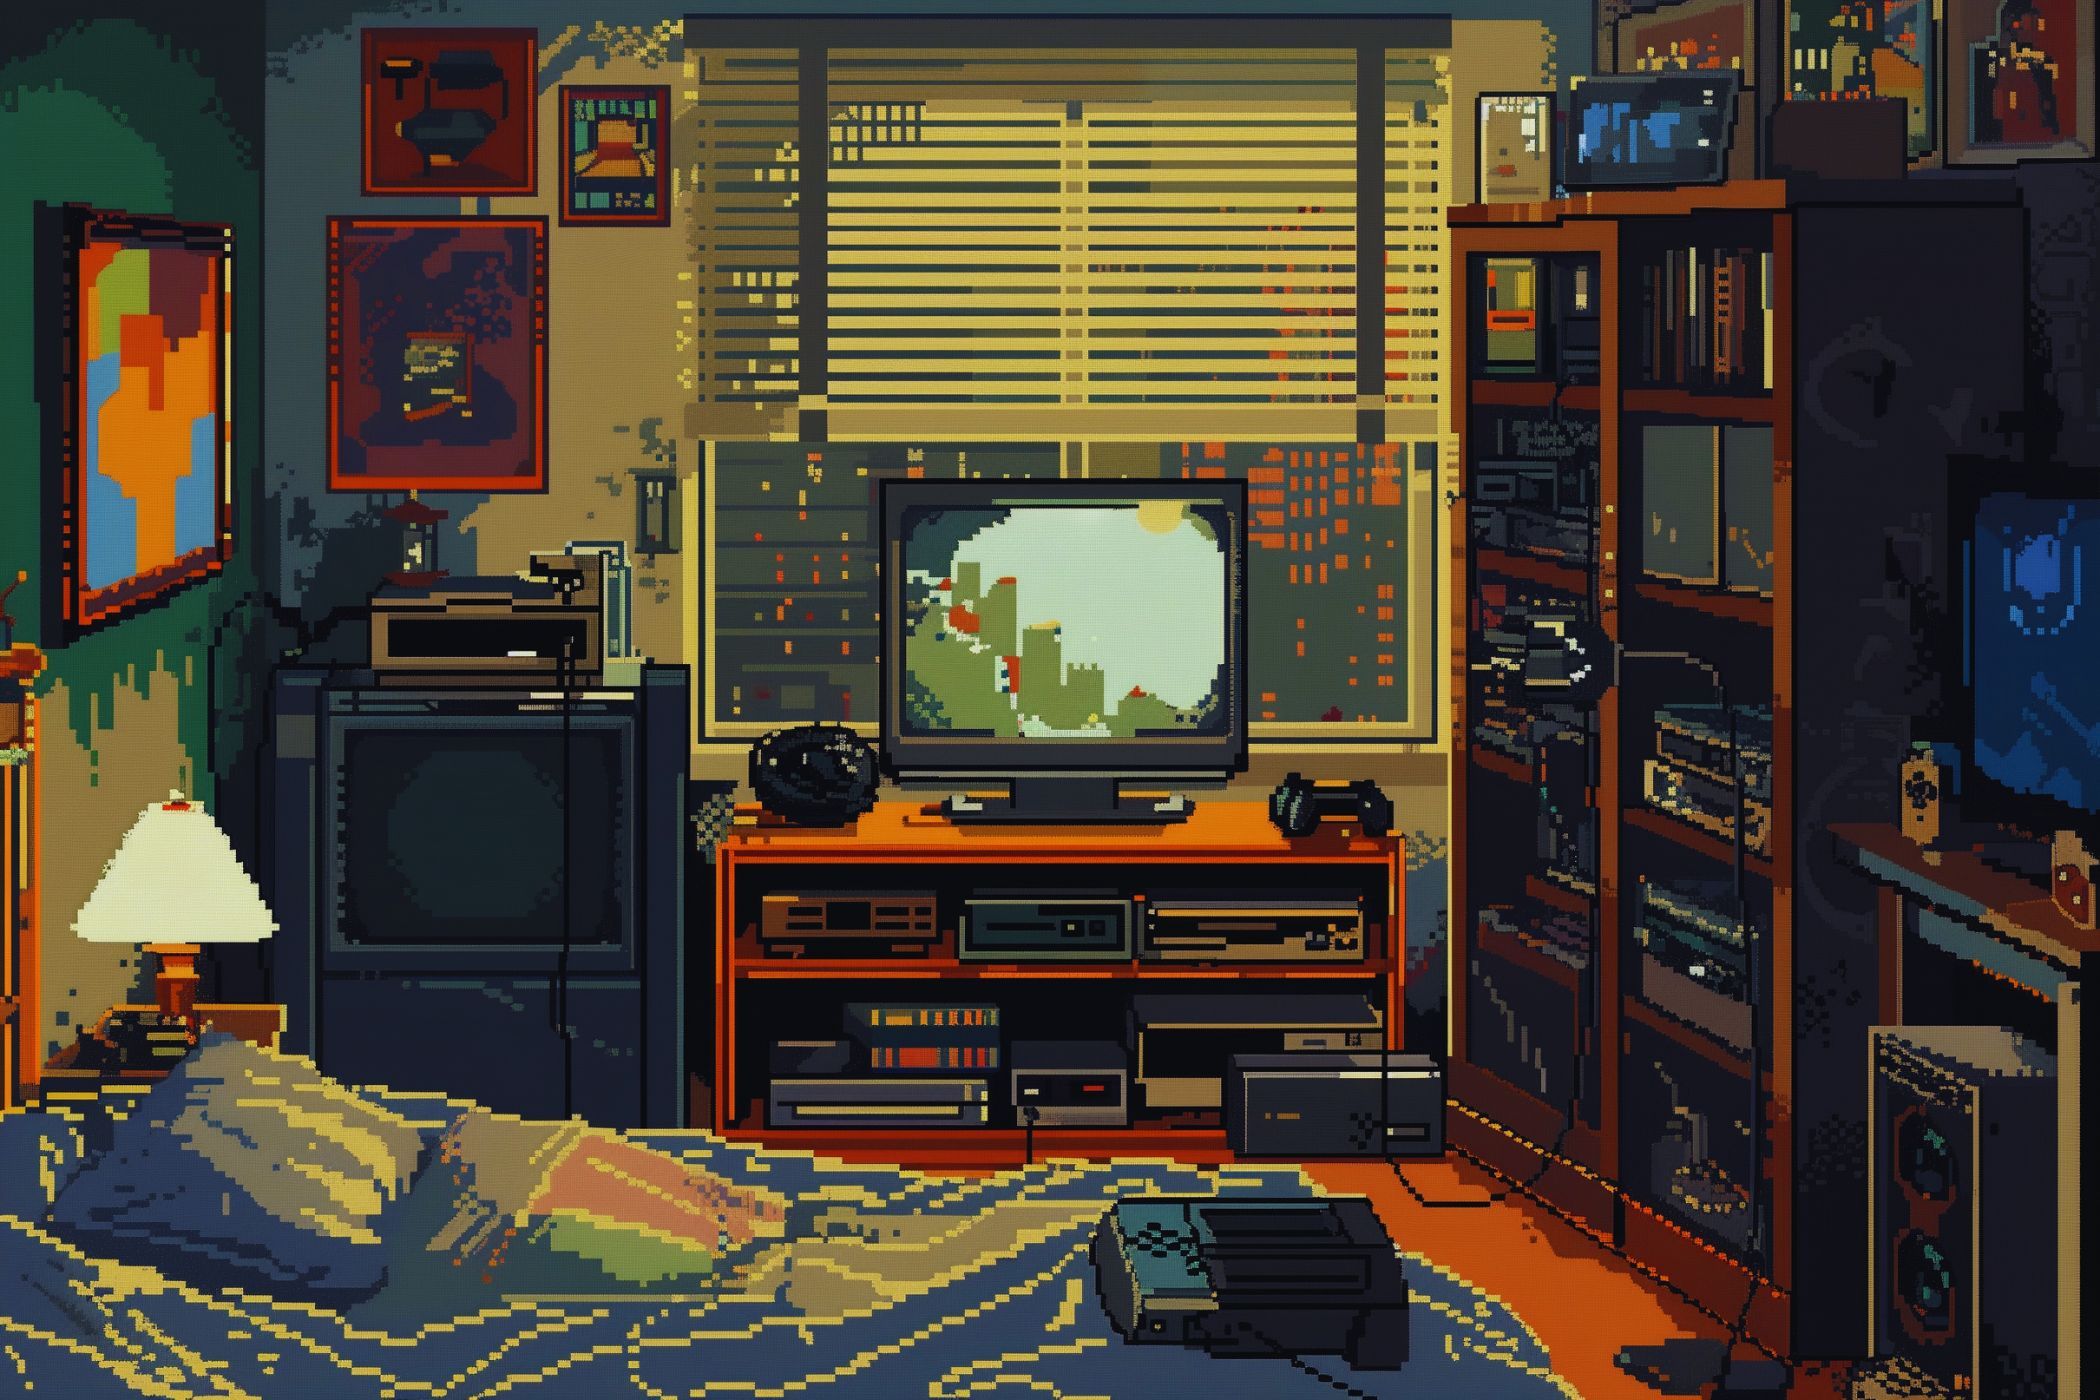 Pixel art retro scene of bedroom filled with nostalgic technology.